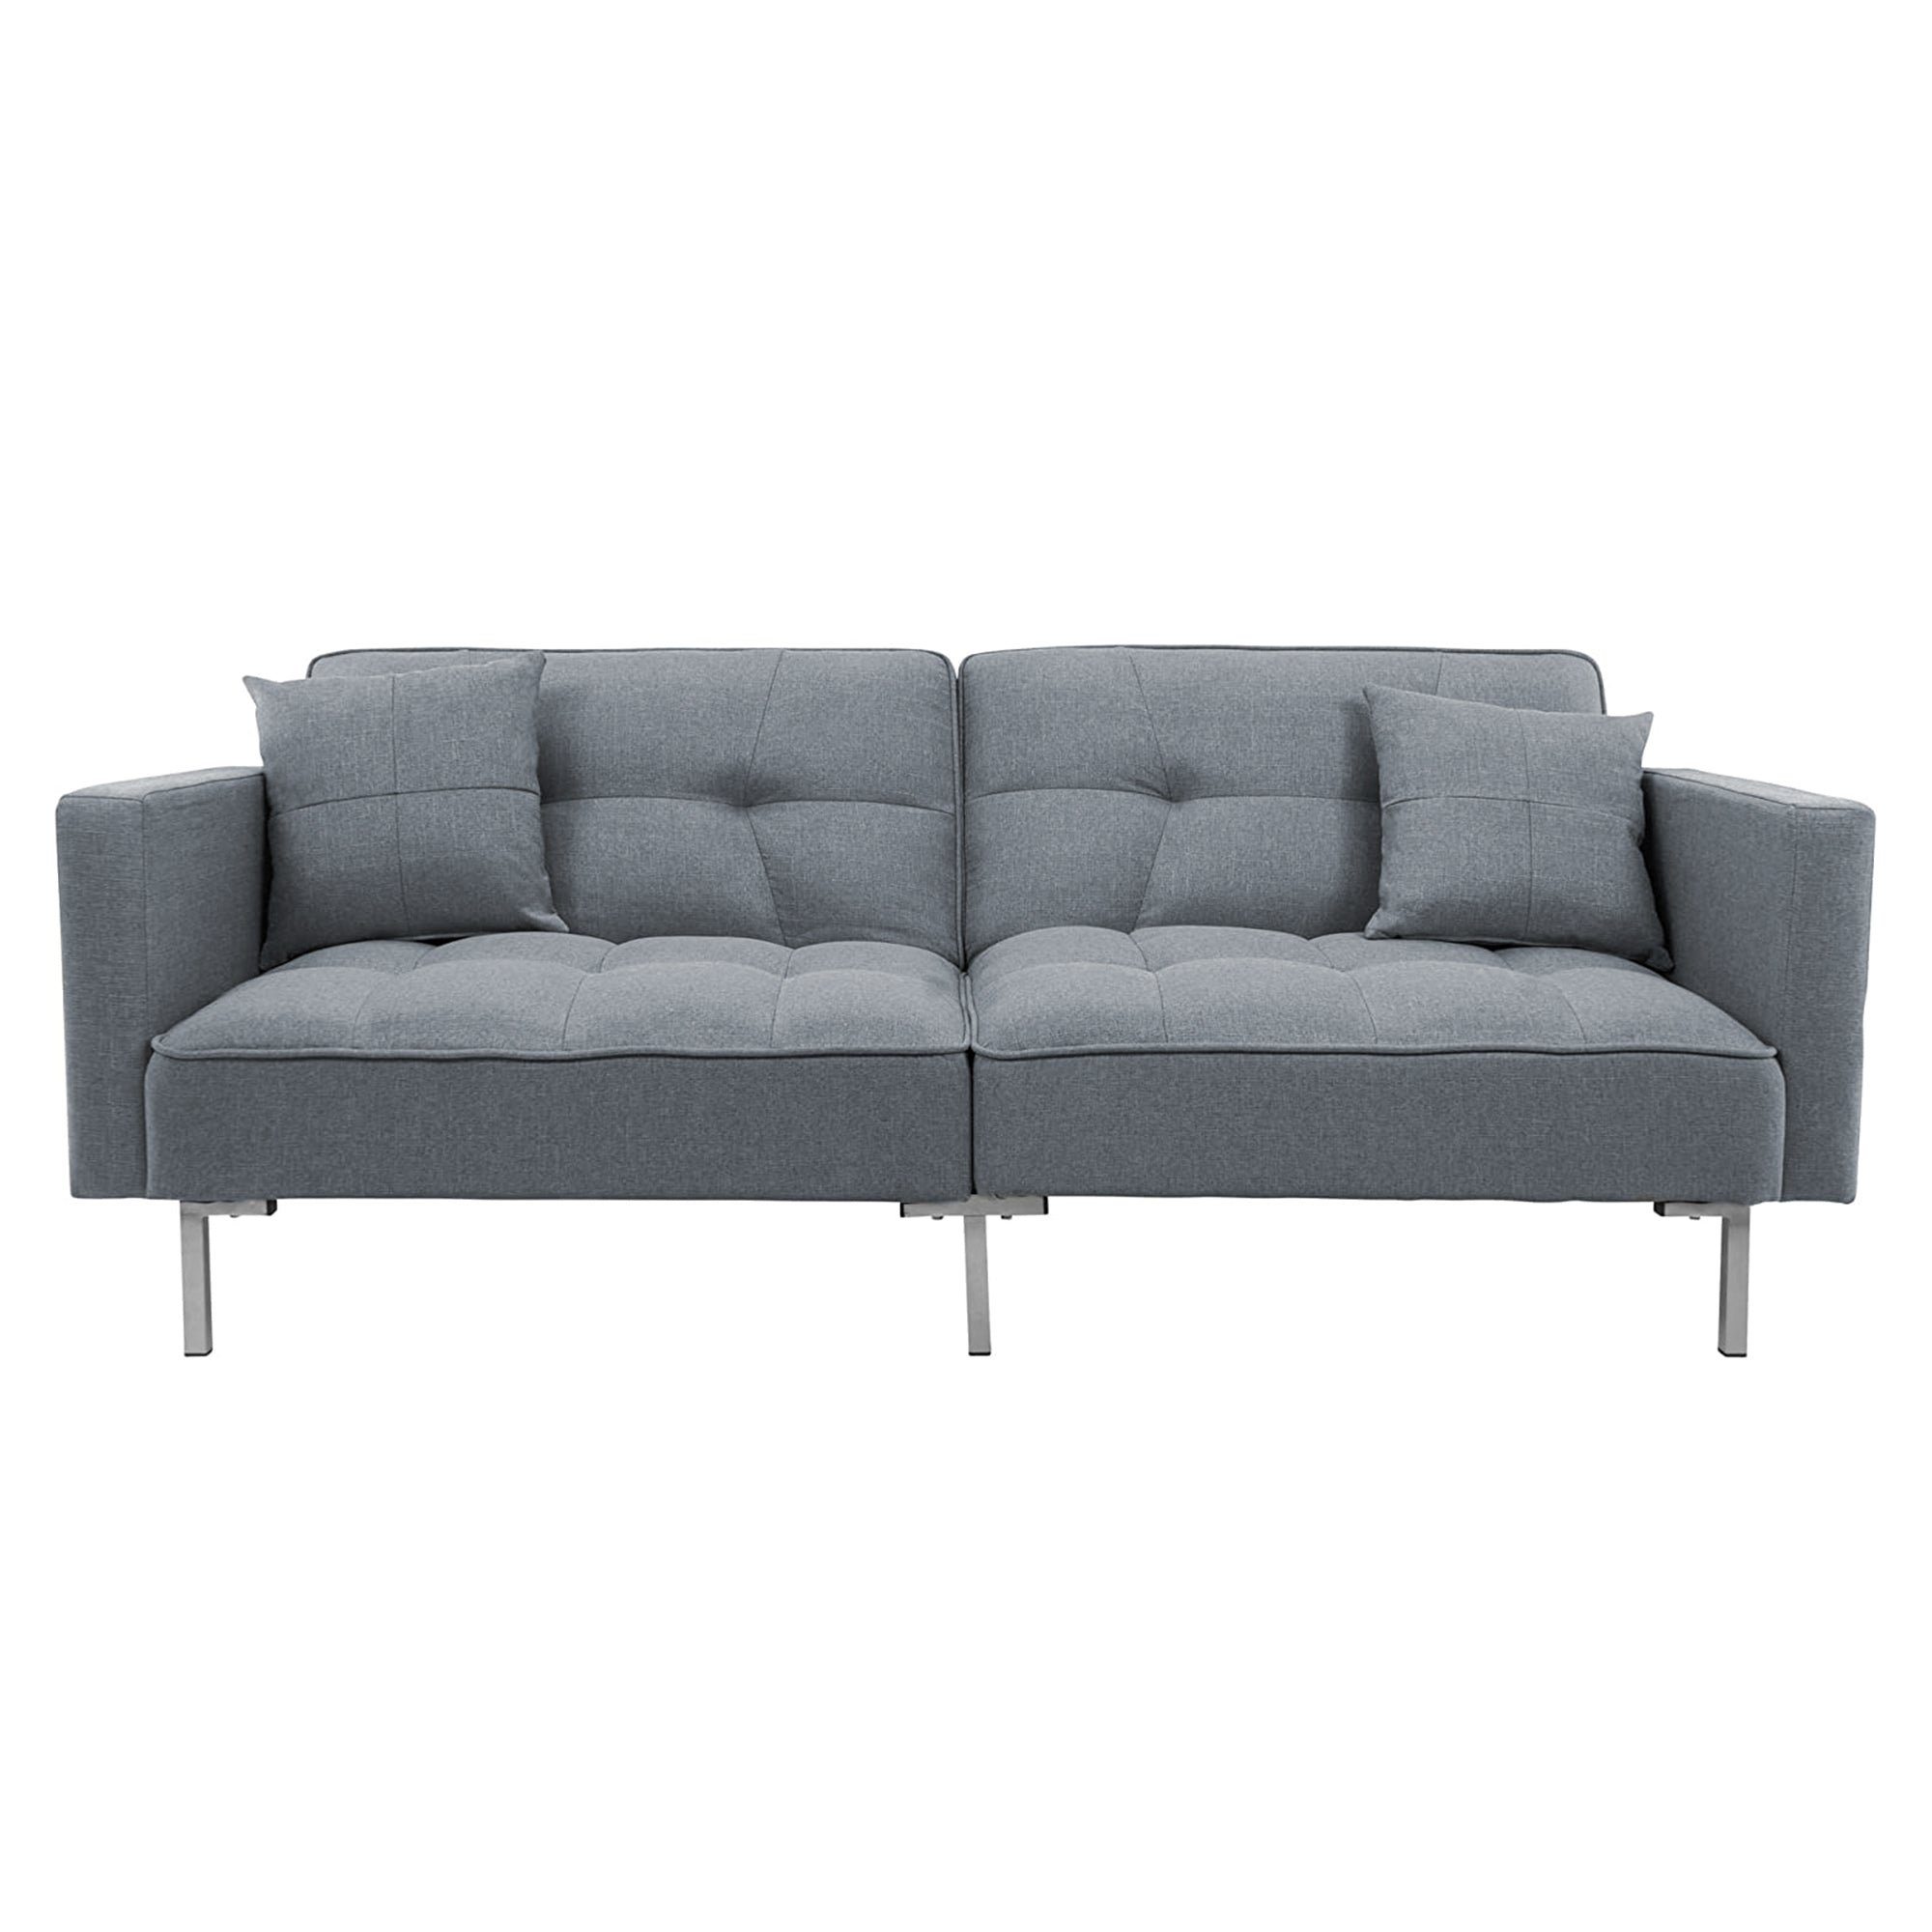 Oliver Convertible Futon Sofa Bed (Dark Gray)